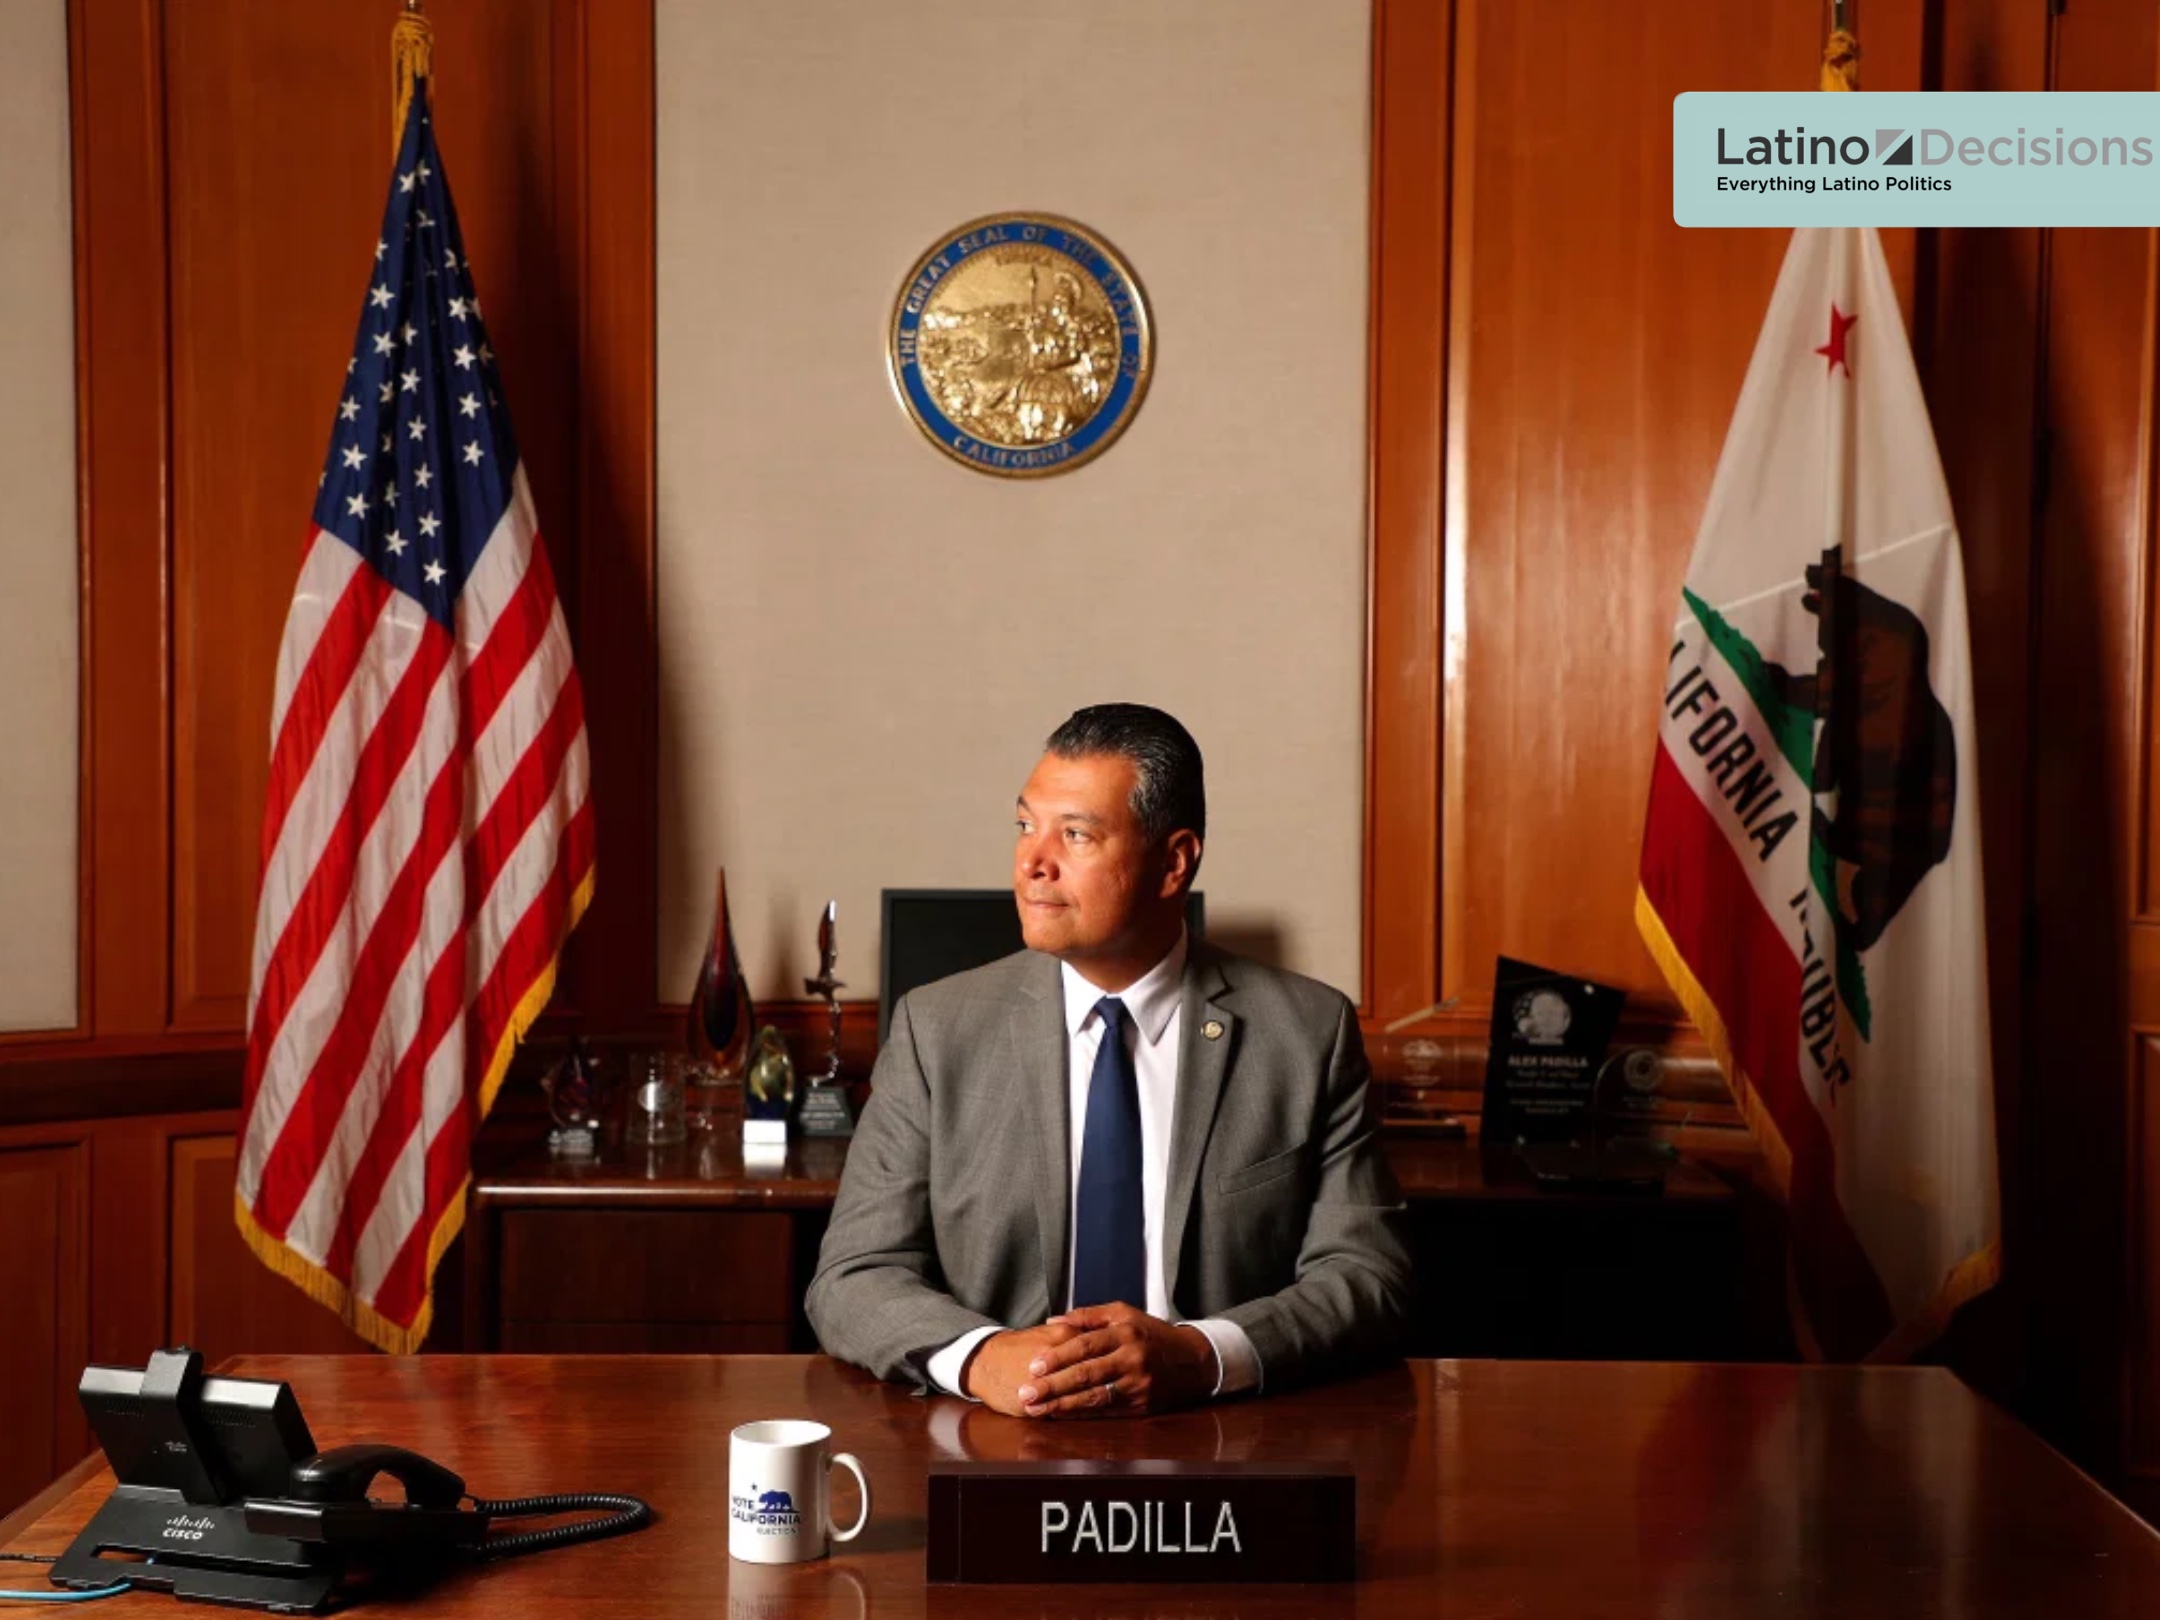 Alex Padilla, Latino Champion of Voter Access,  New California US Senator